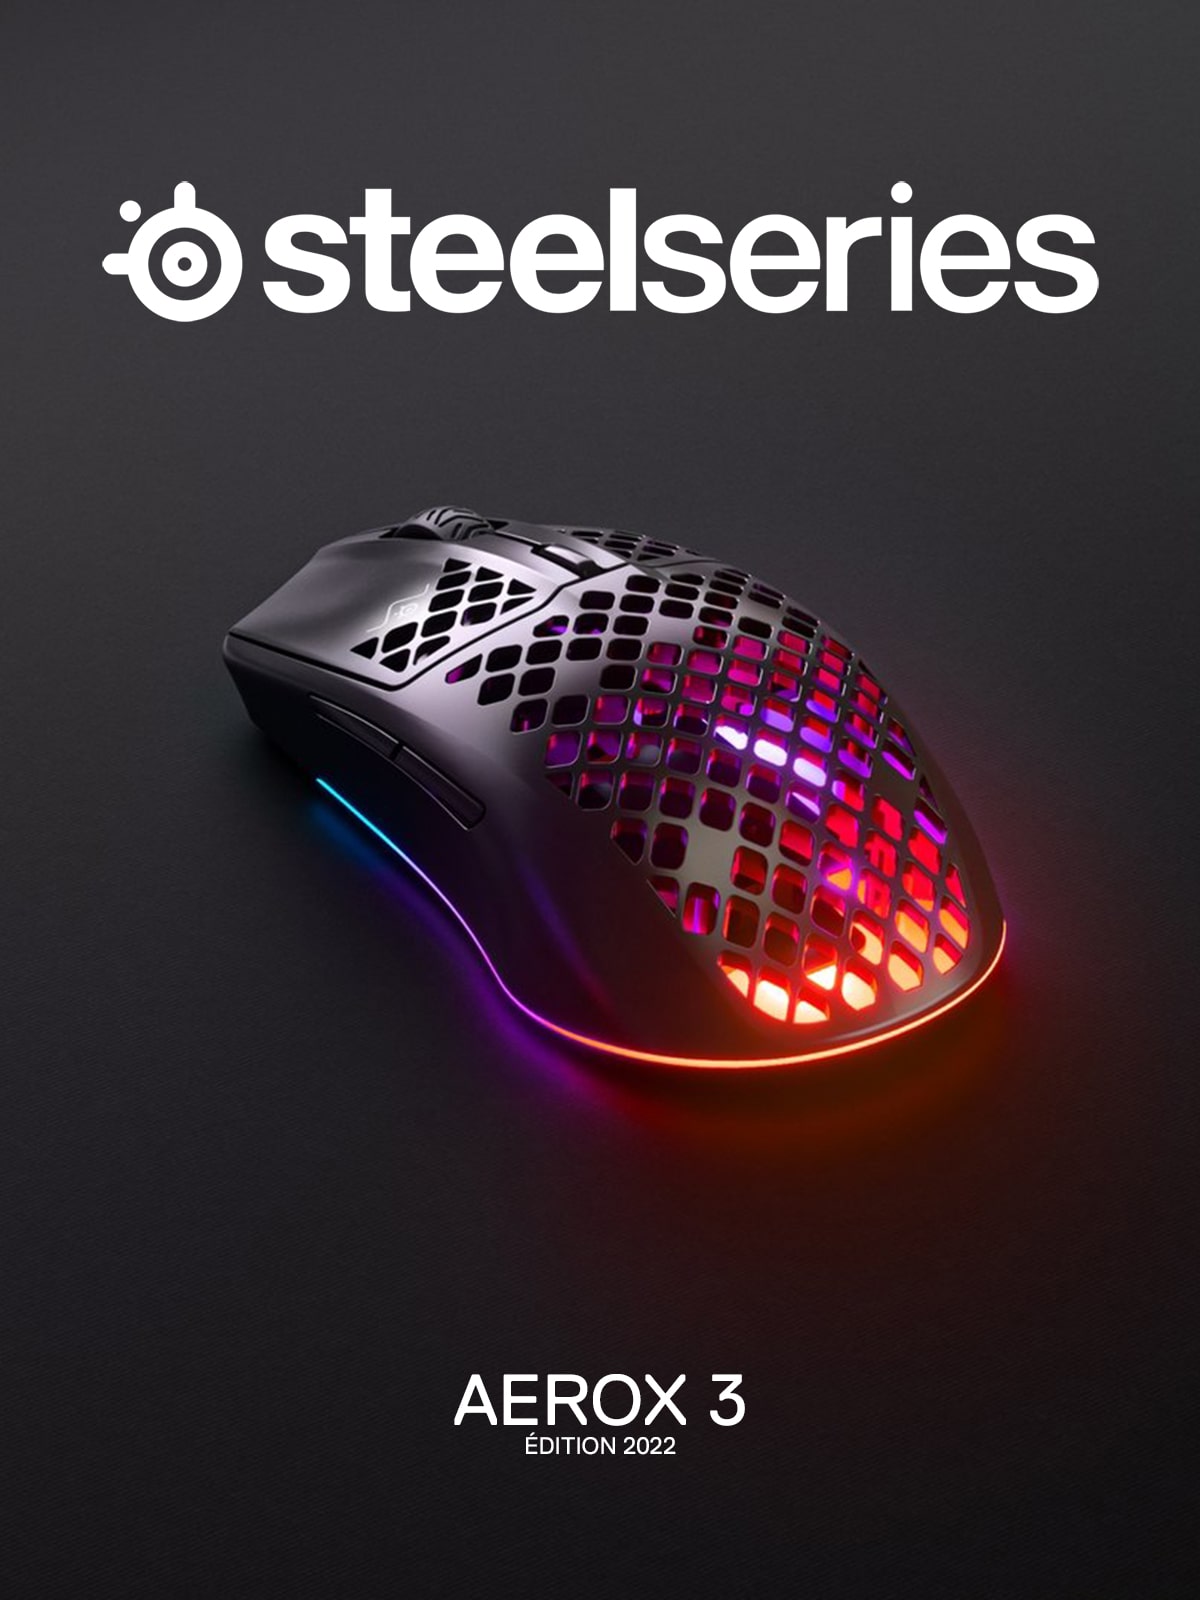 Aerox 3 Wireless, Souris de jeu sans fil ultra-légère